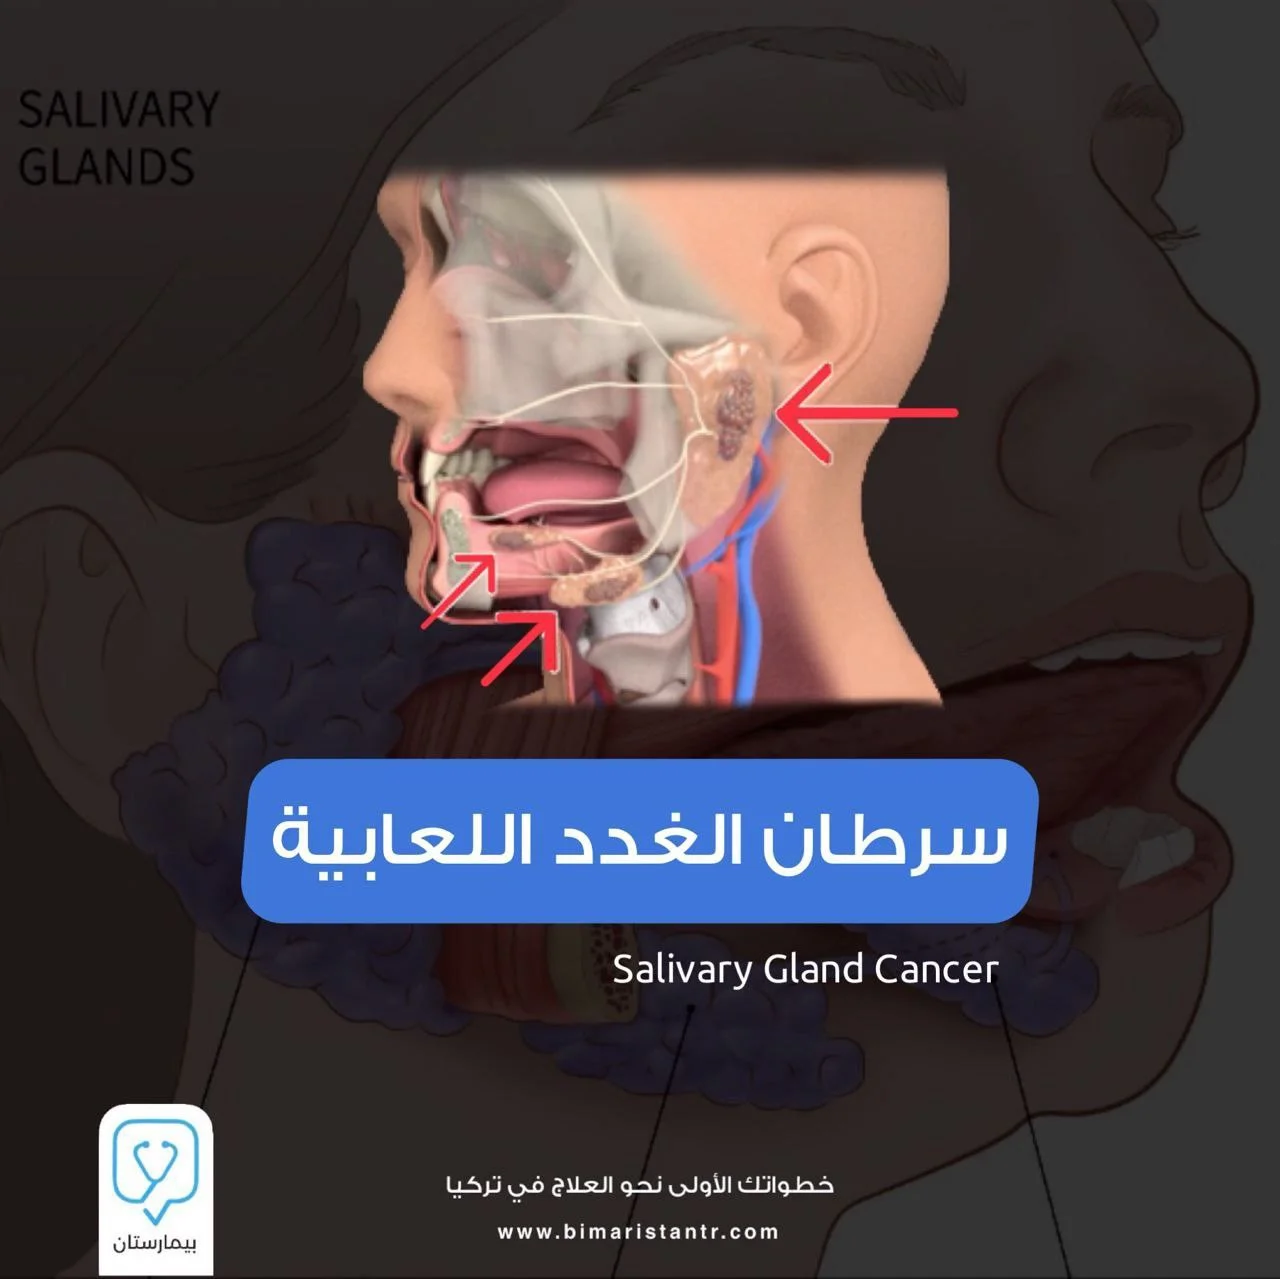 salivary-glands-cancer